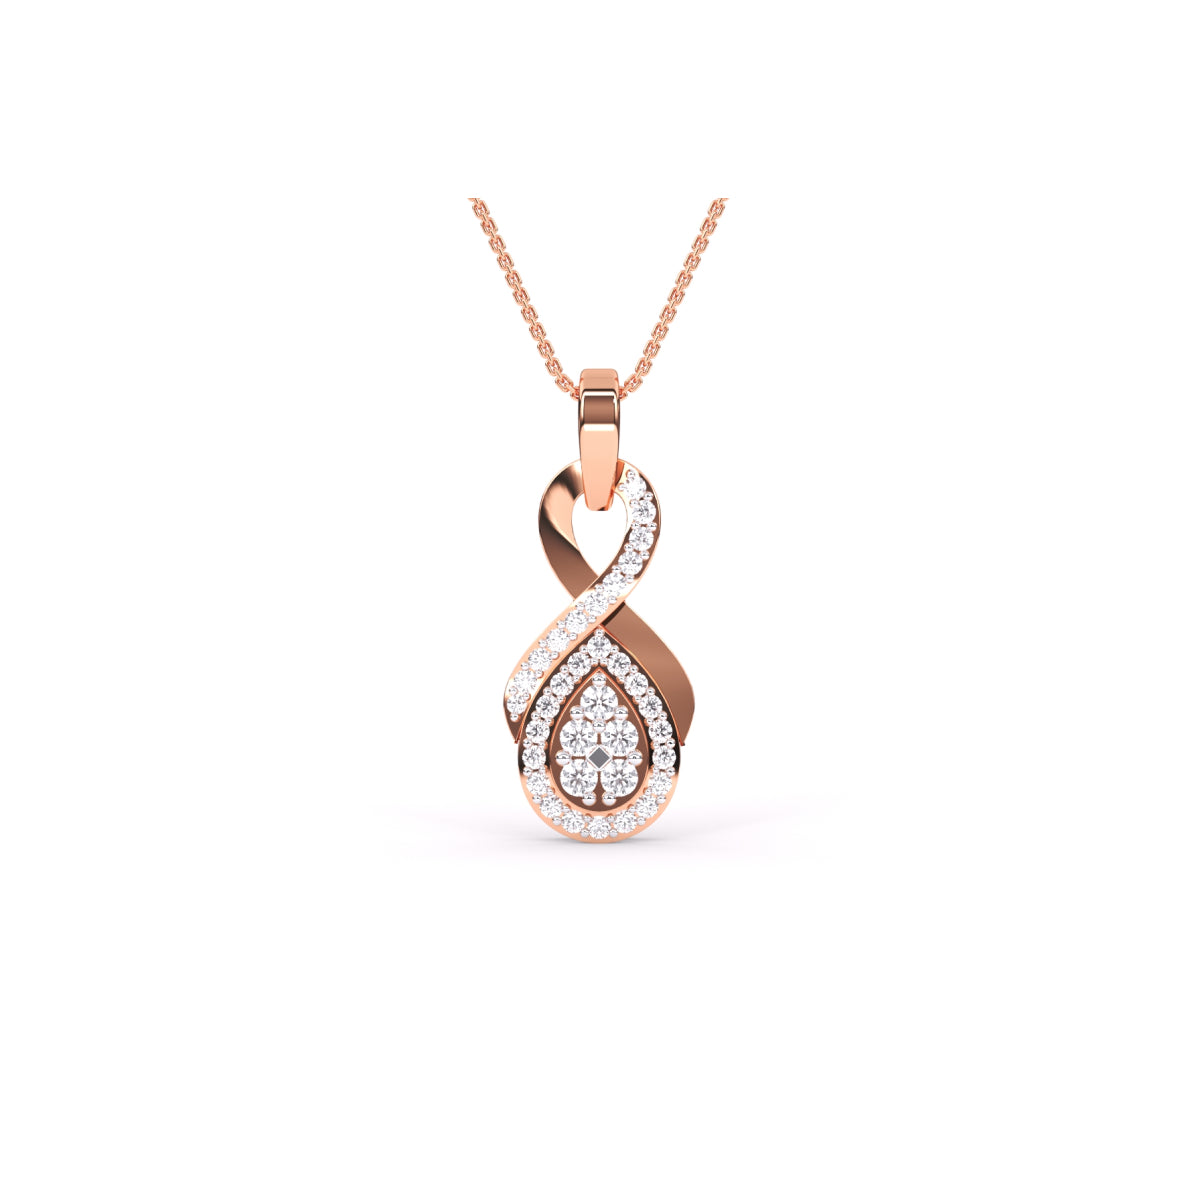 Buy Luxurious Round Diamond Pendant at Best Price in India